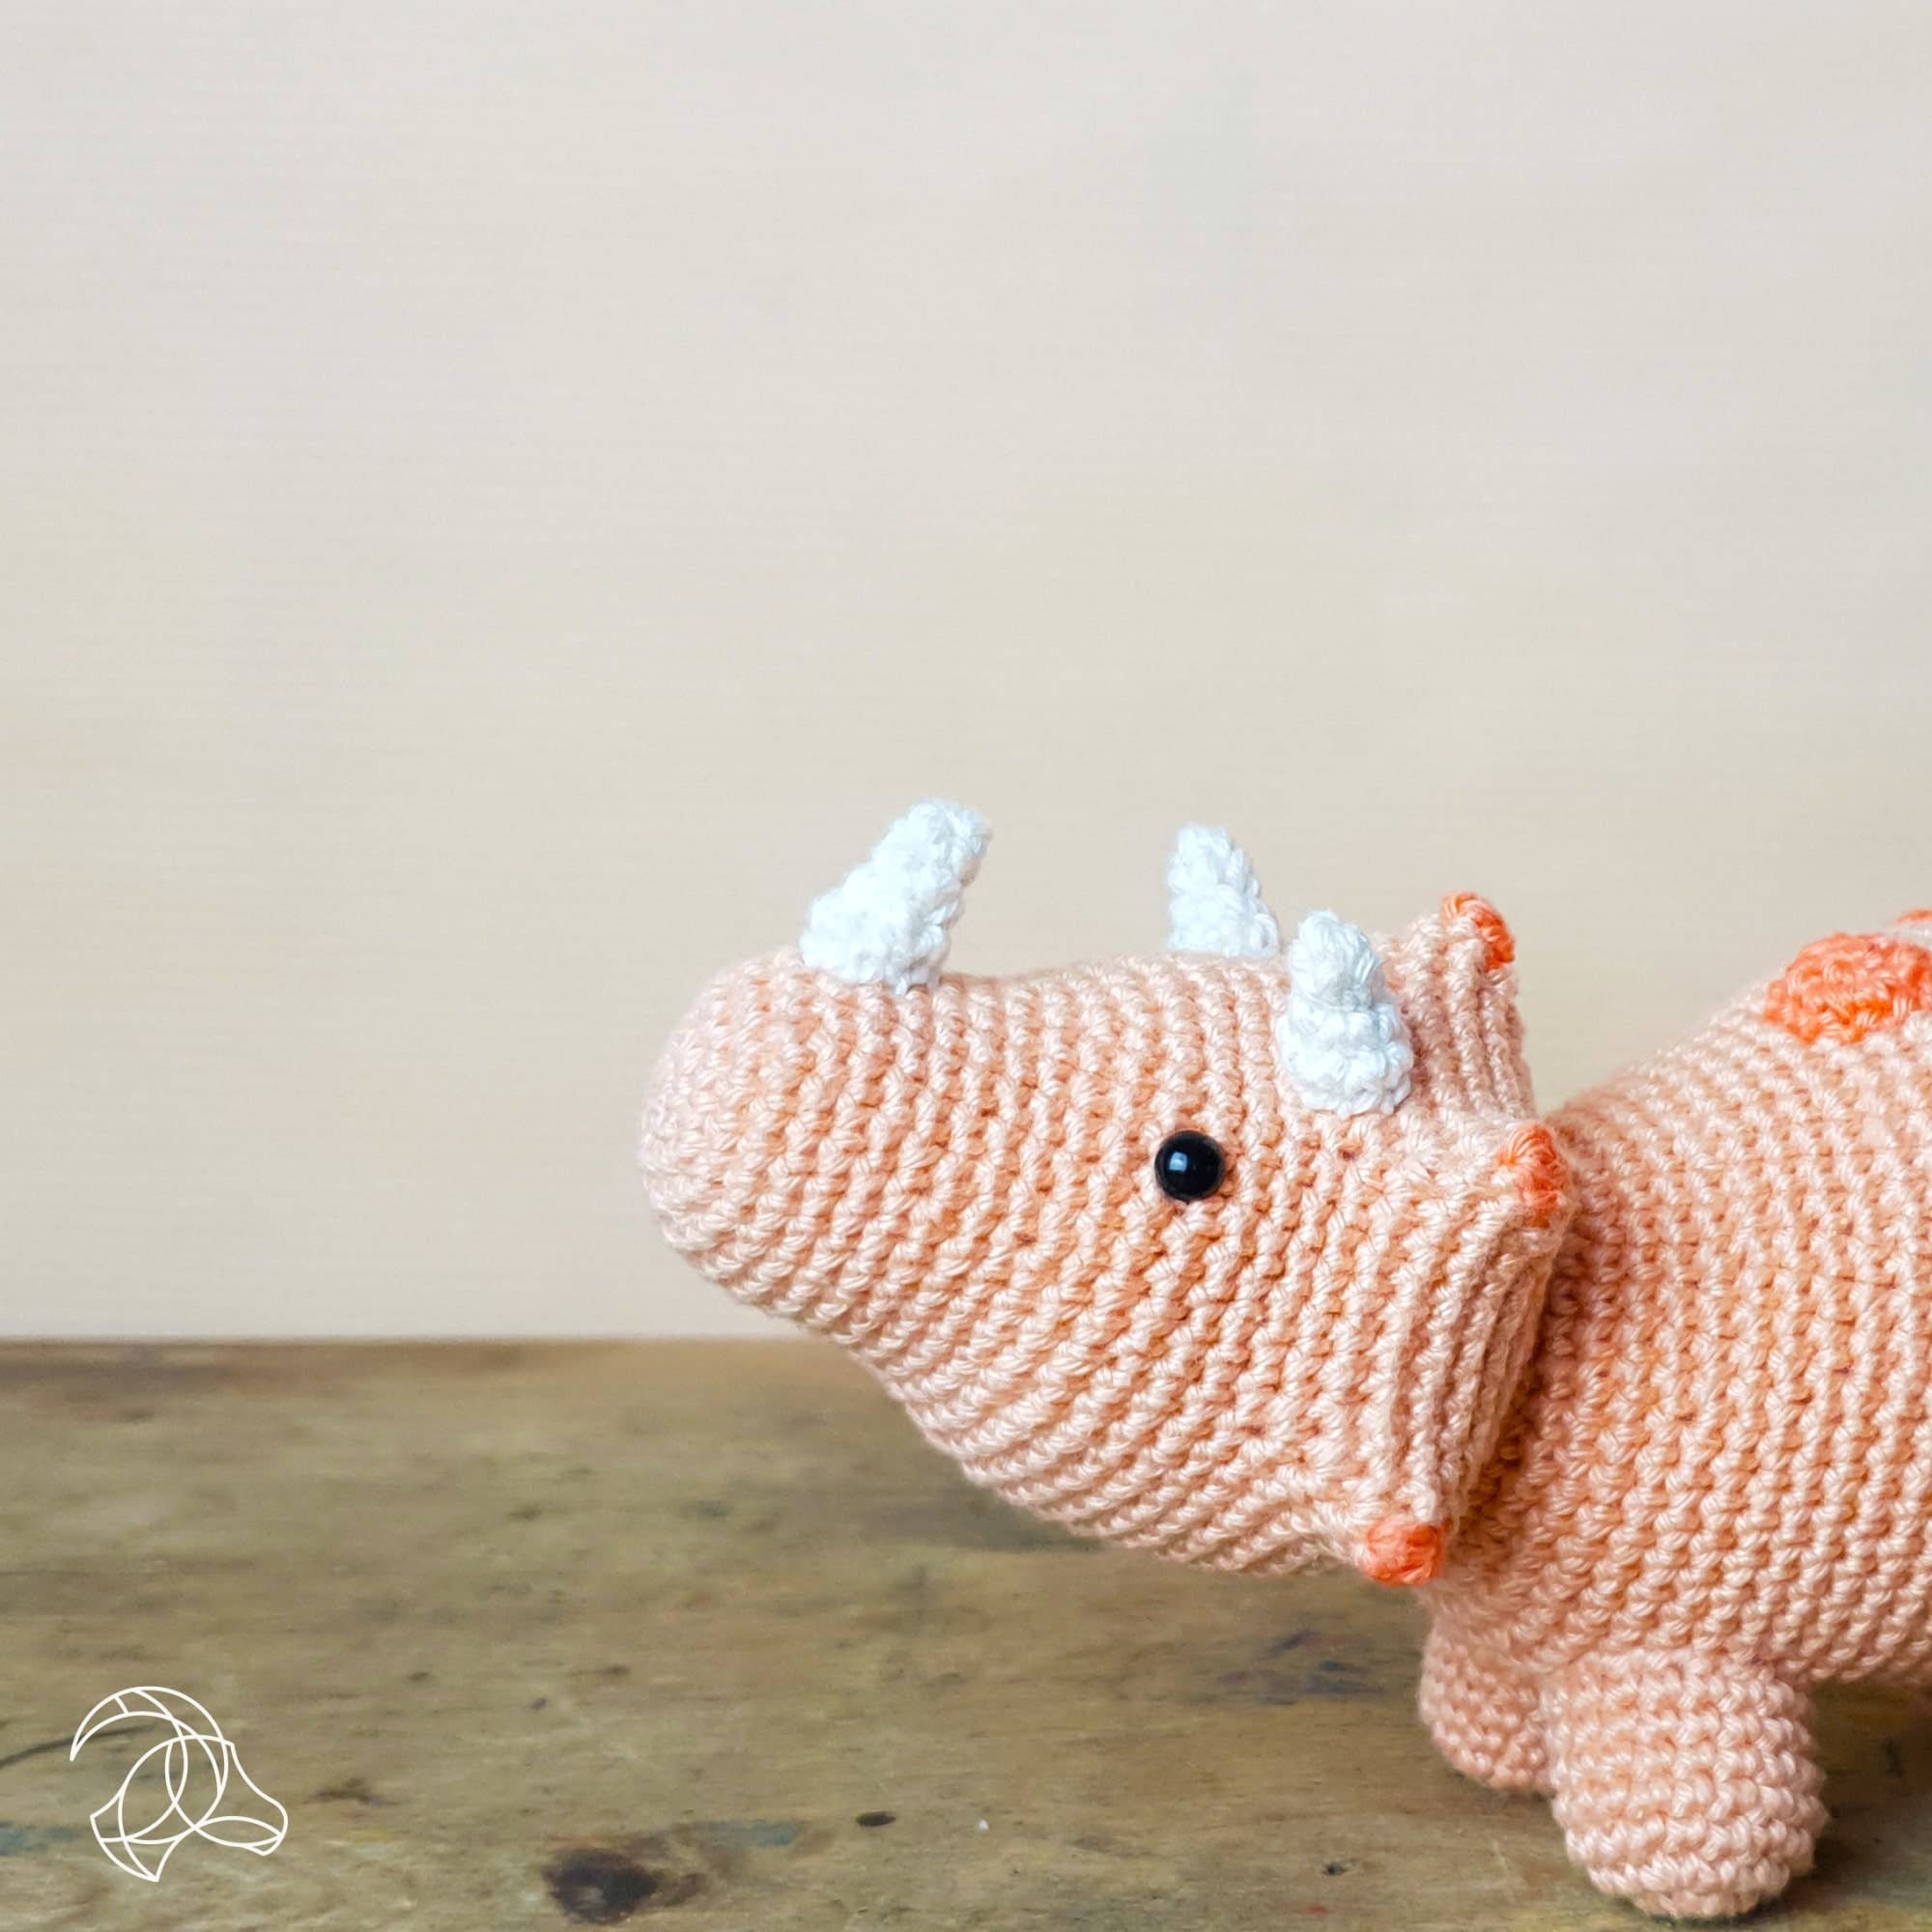 Wholesale DIY Crochet Kit - Retro Red Van for your store - Faire